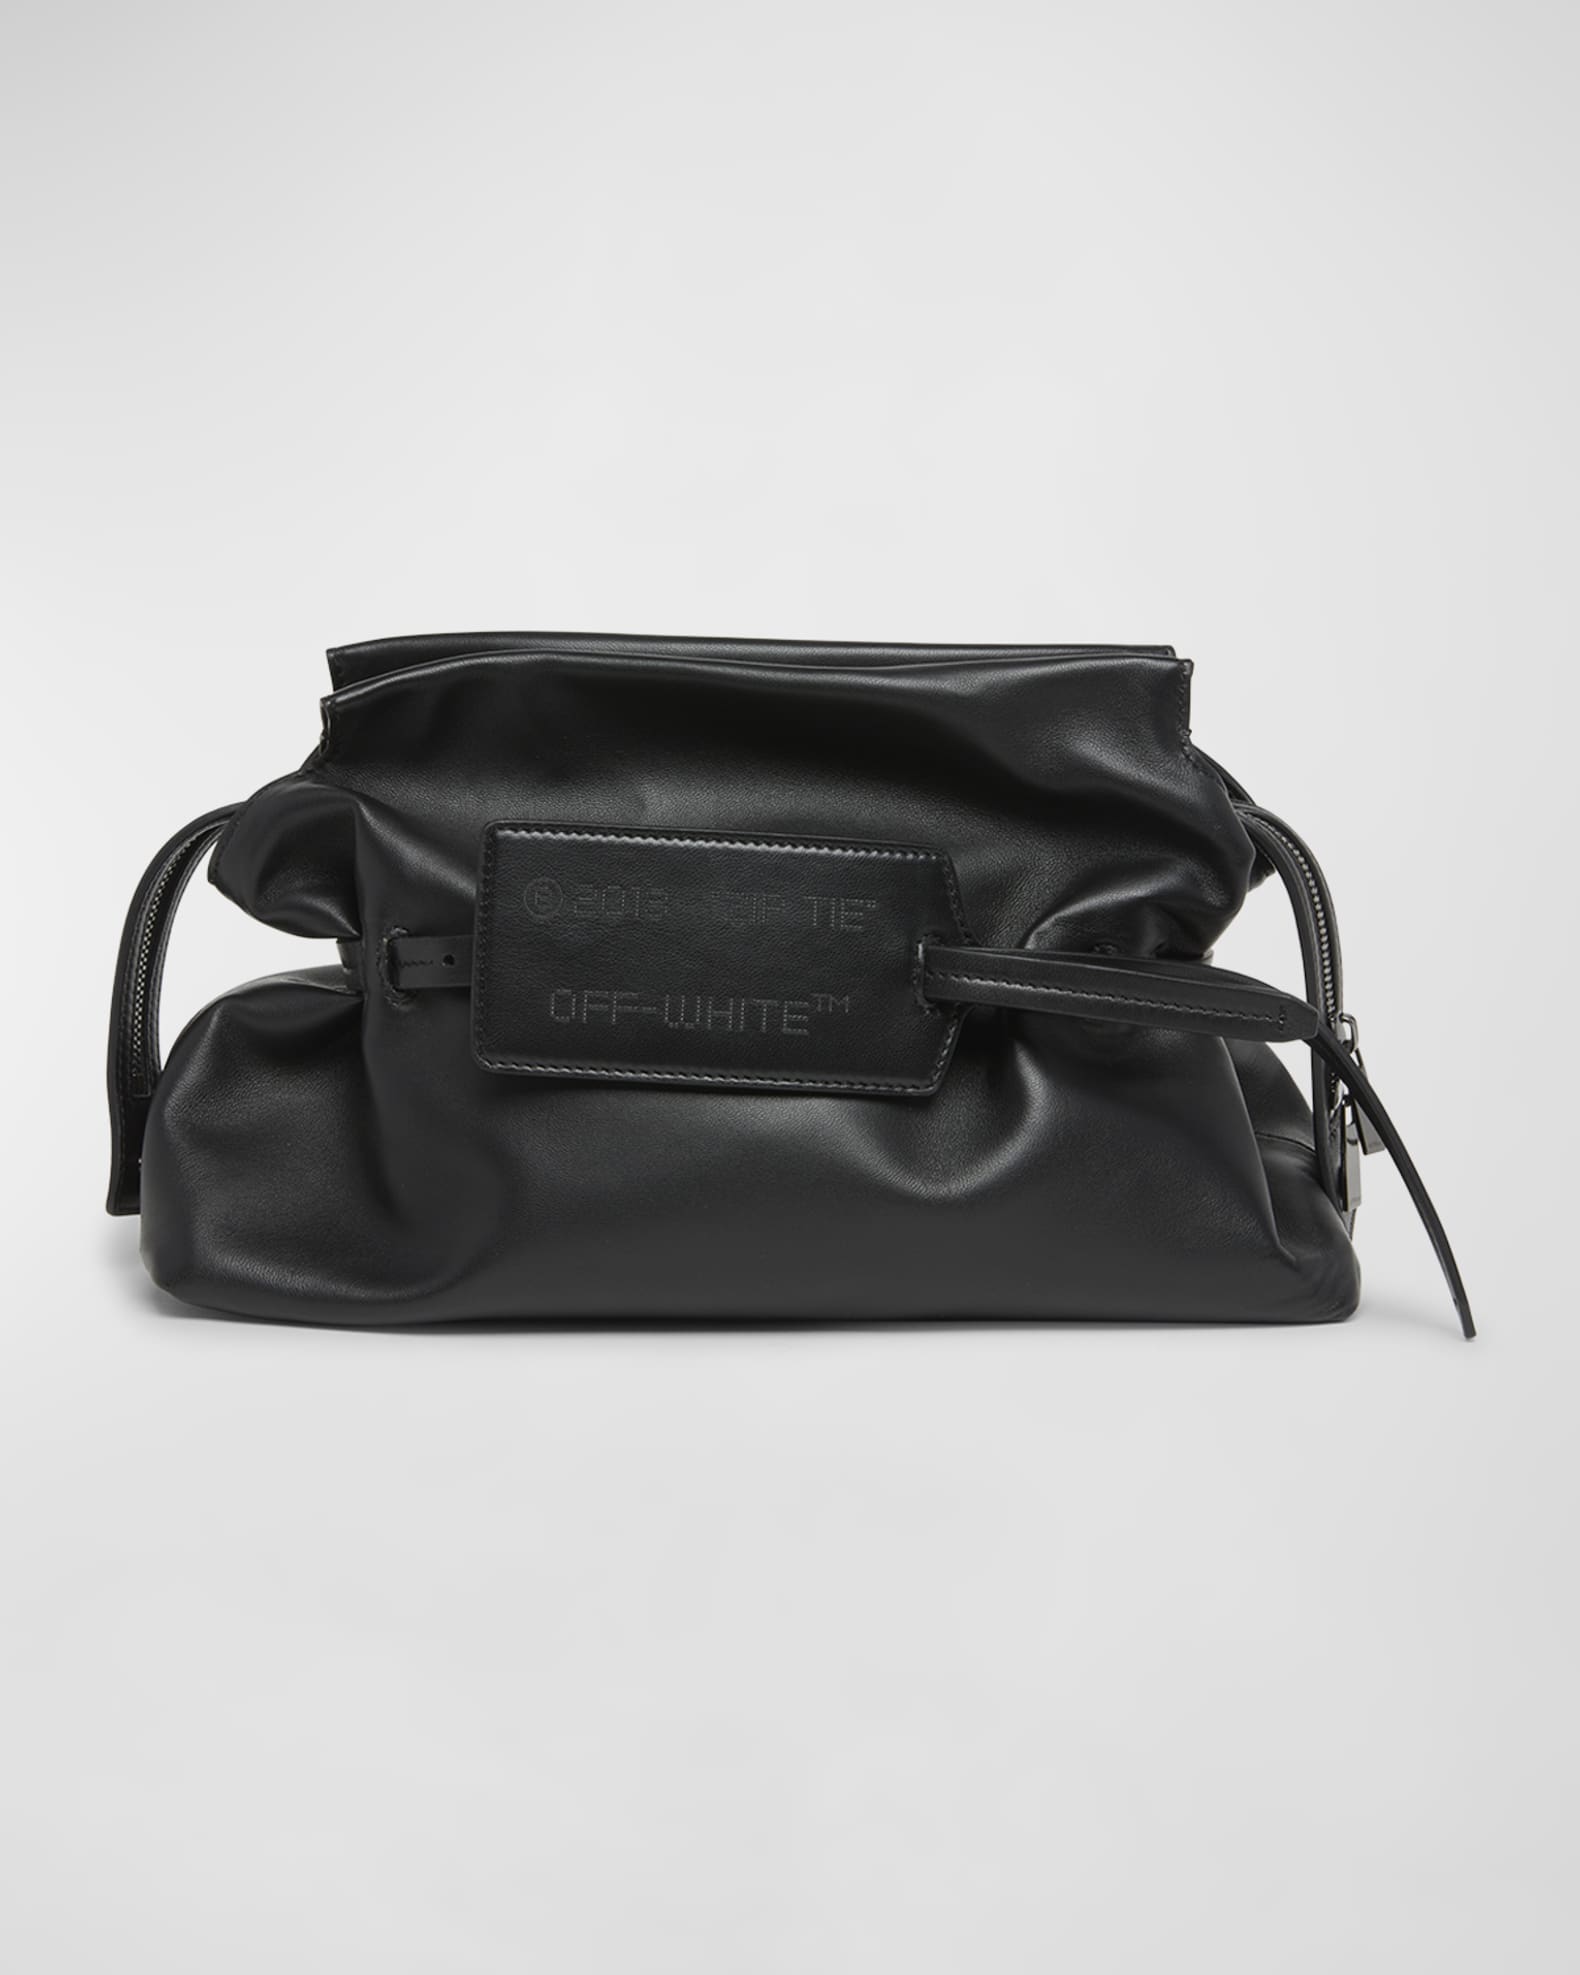 New Off-White c/o Virgil Abloh bag leather clutch black white zipped